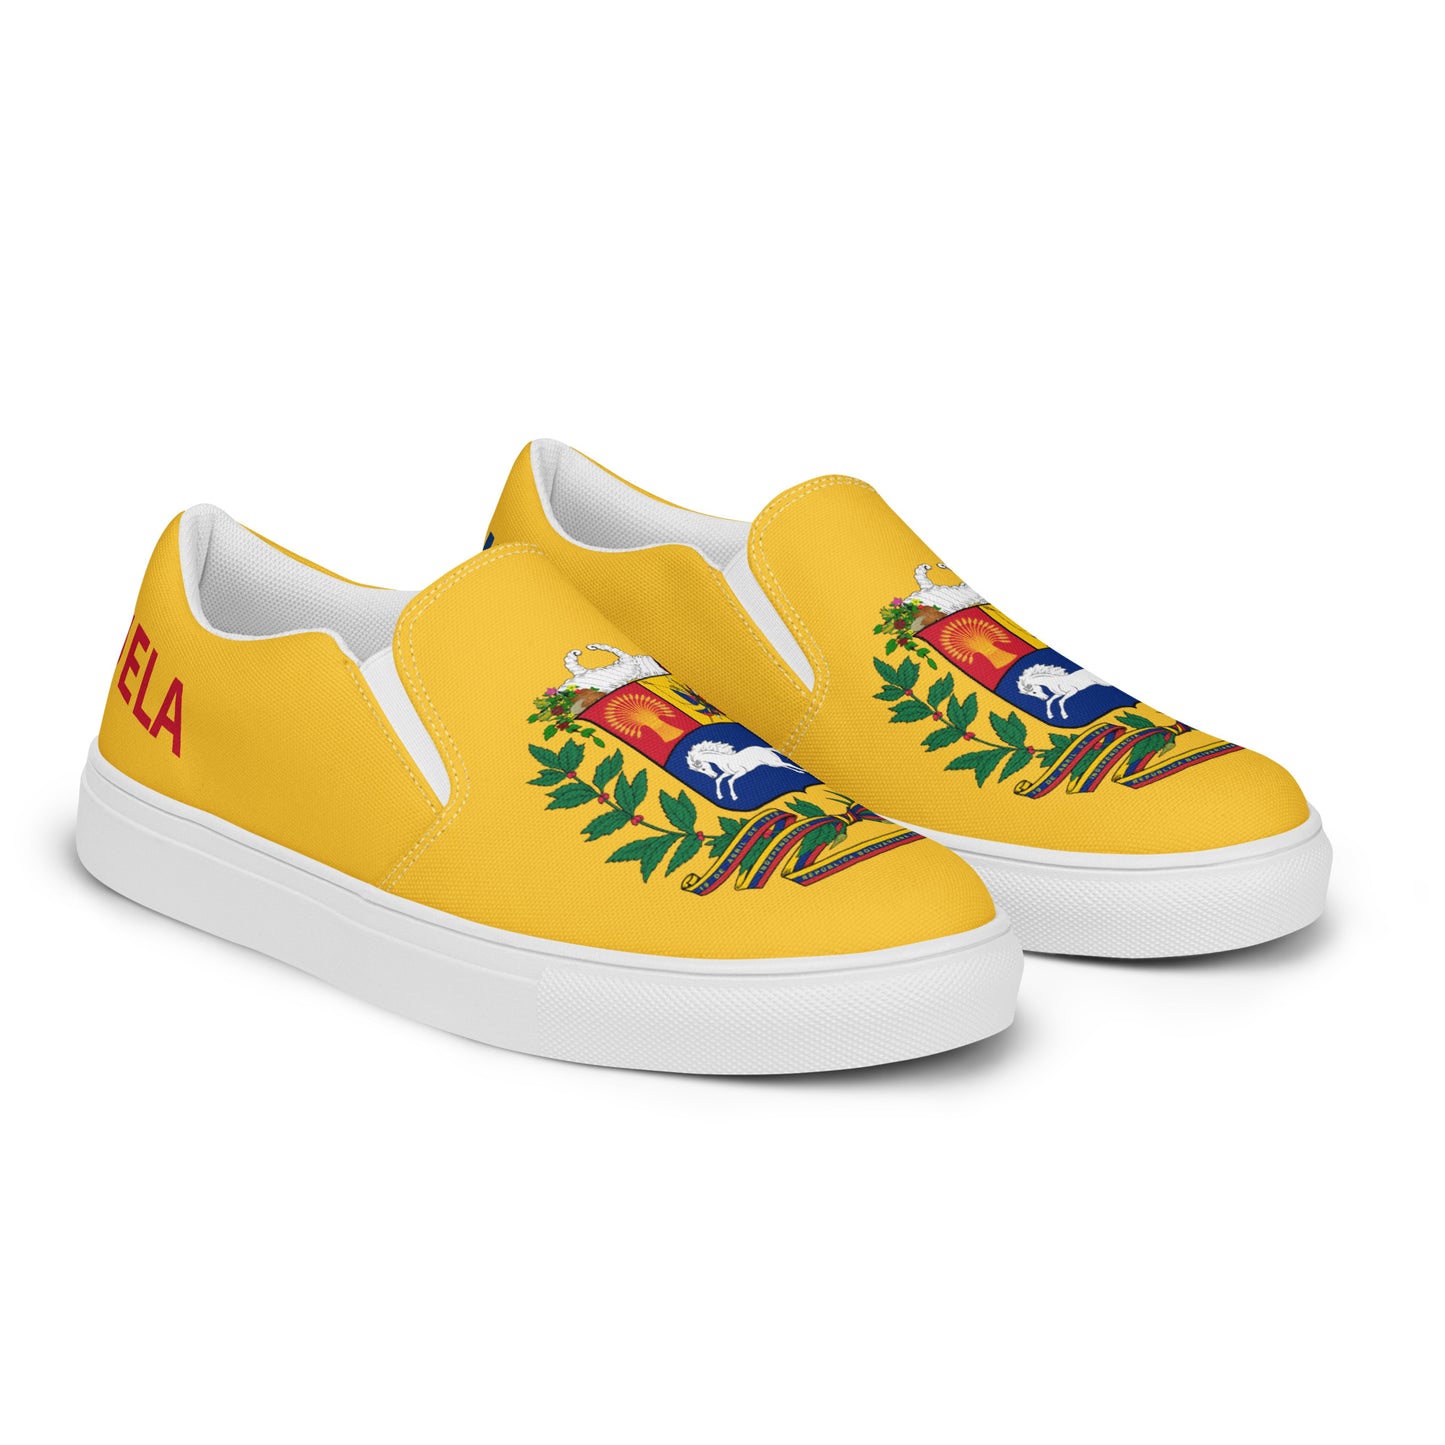 Venezuela - Men - Yellow - Slip-on shoes